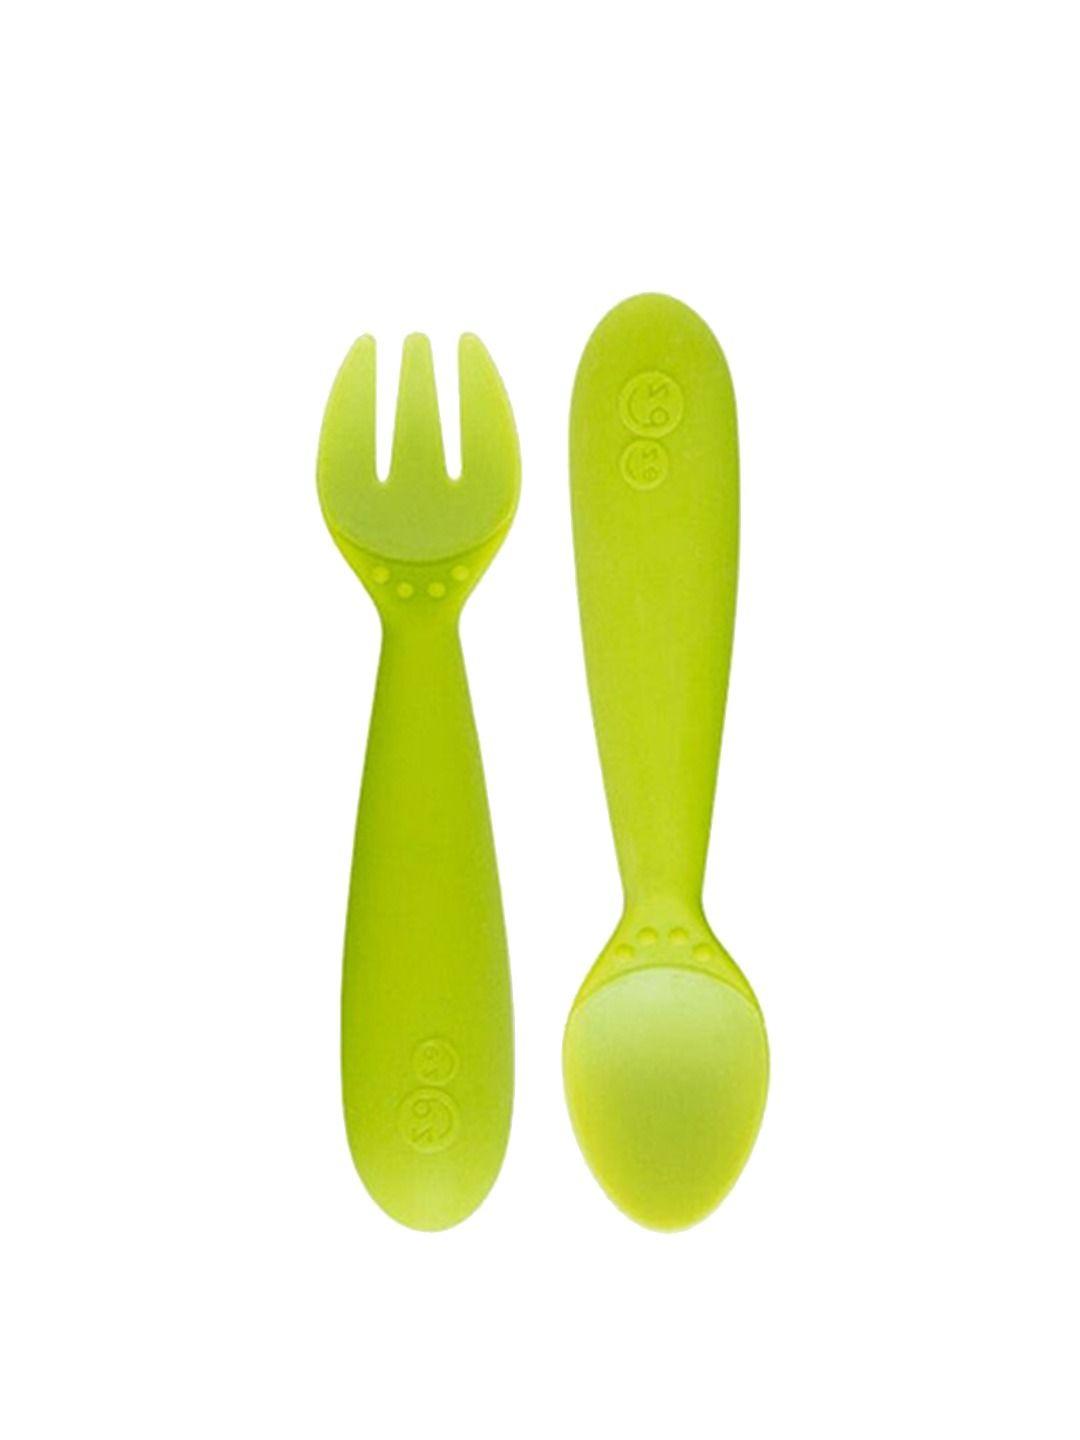 ezpz kids lime green mini utensil set